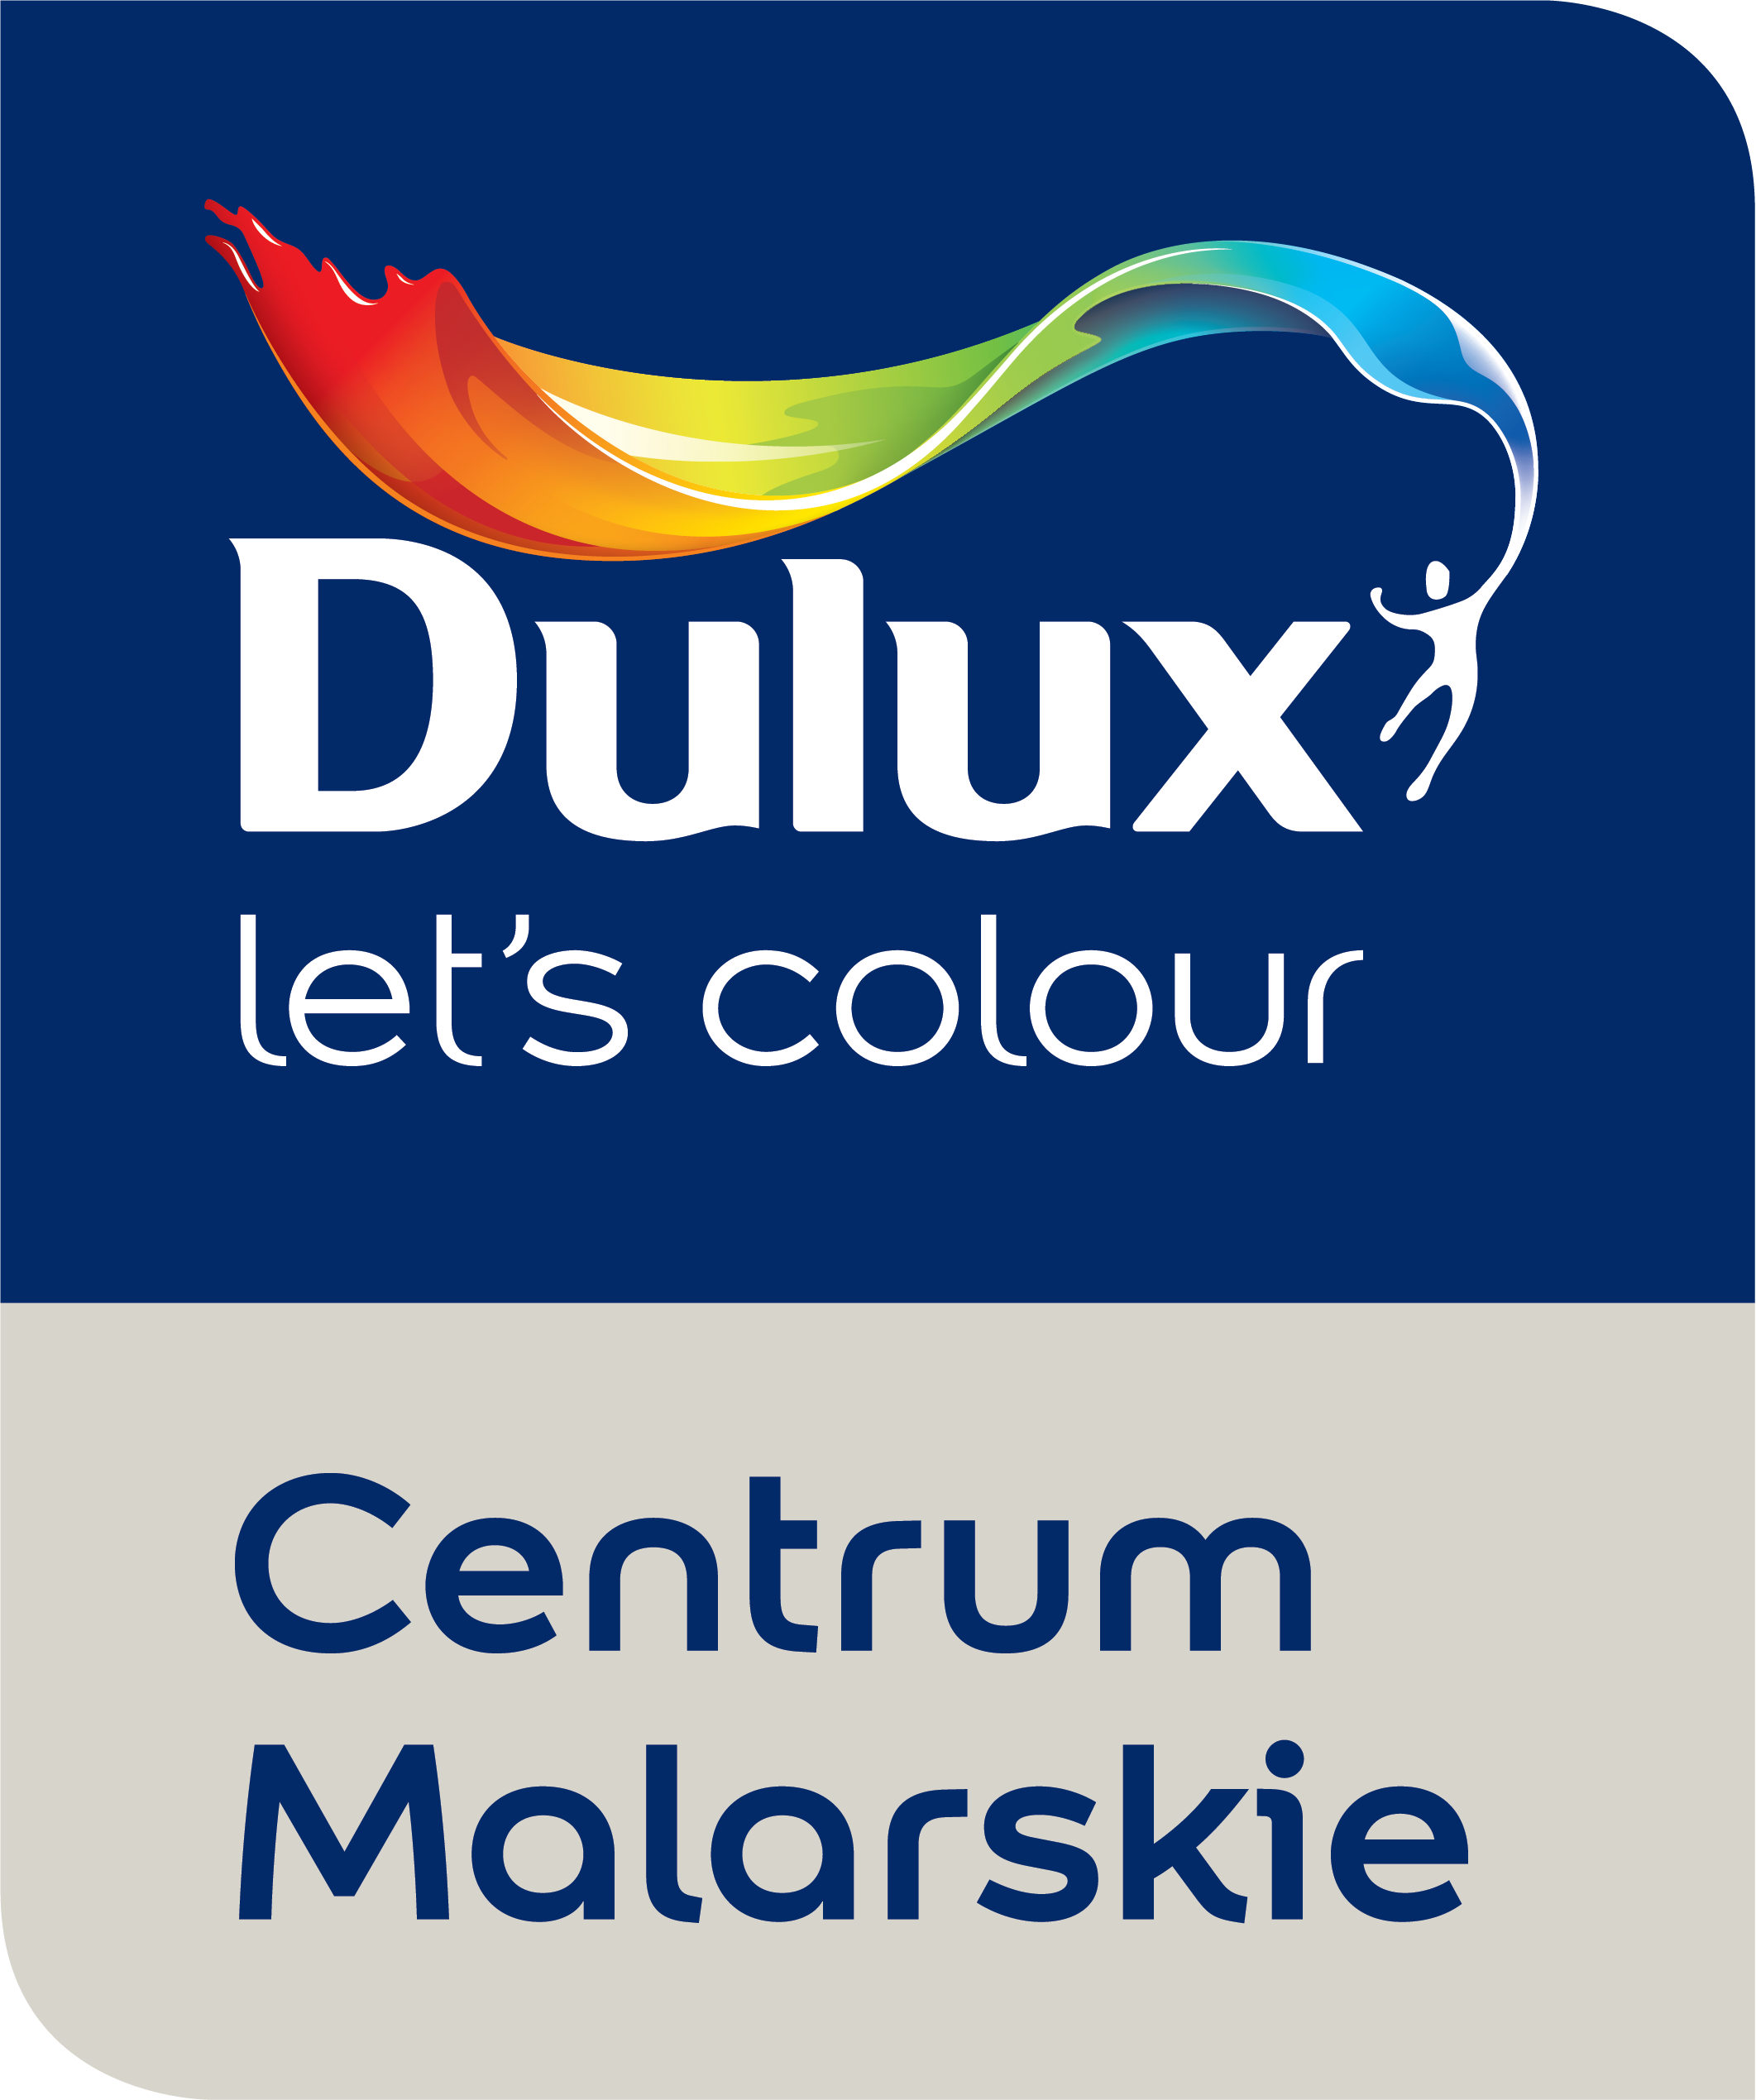 Dulux Centrum Malarskie